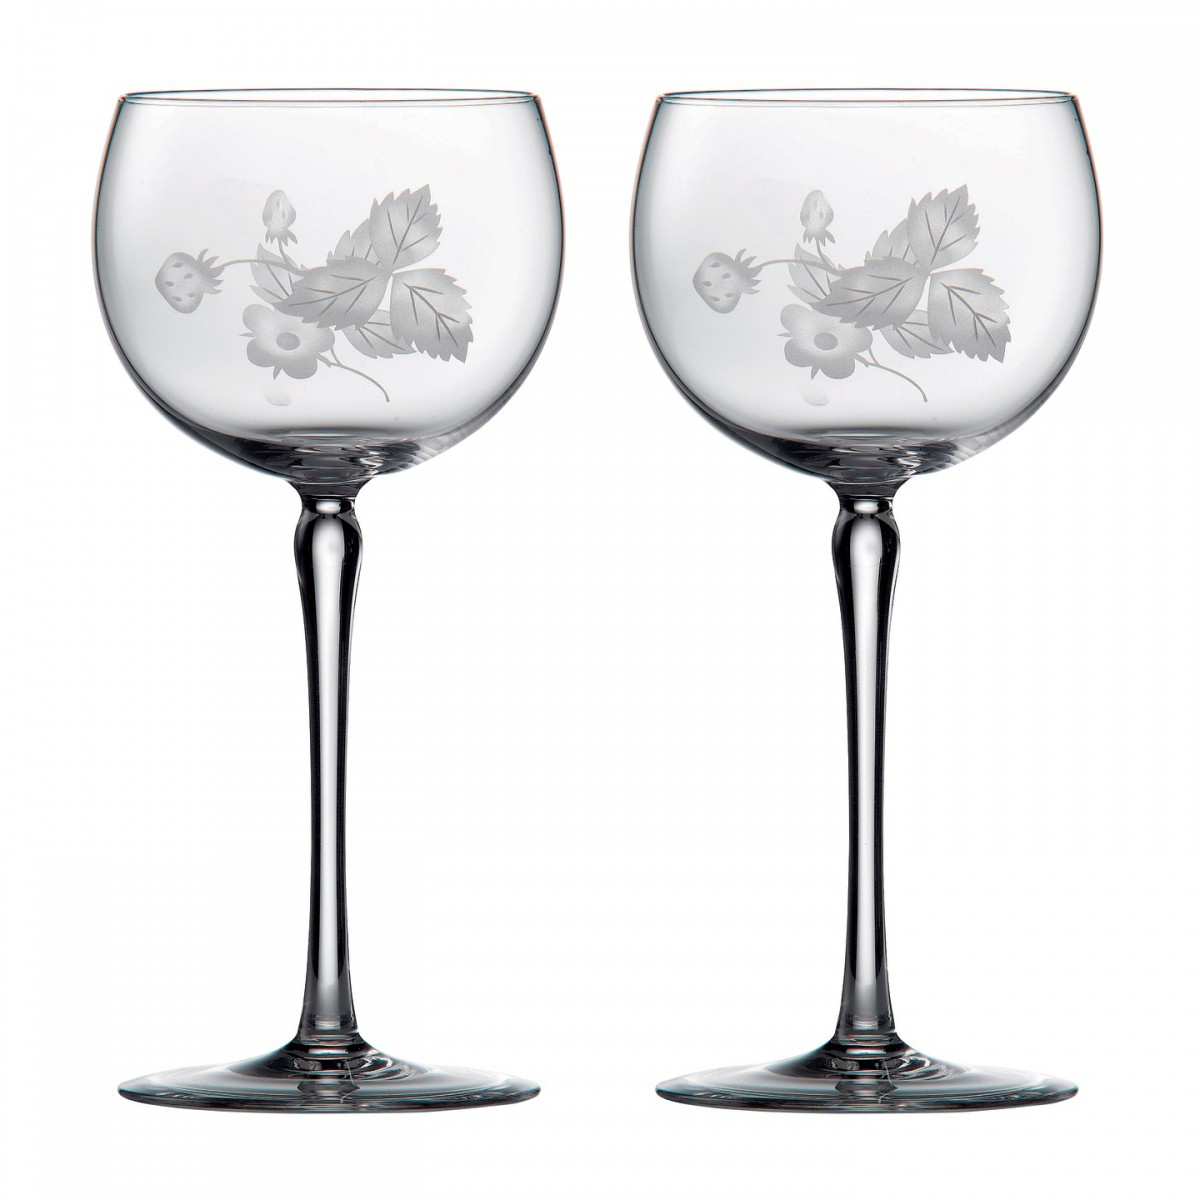 Shop Set of 8 Wedgwood wine colored glasses | Hunt & Gather